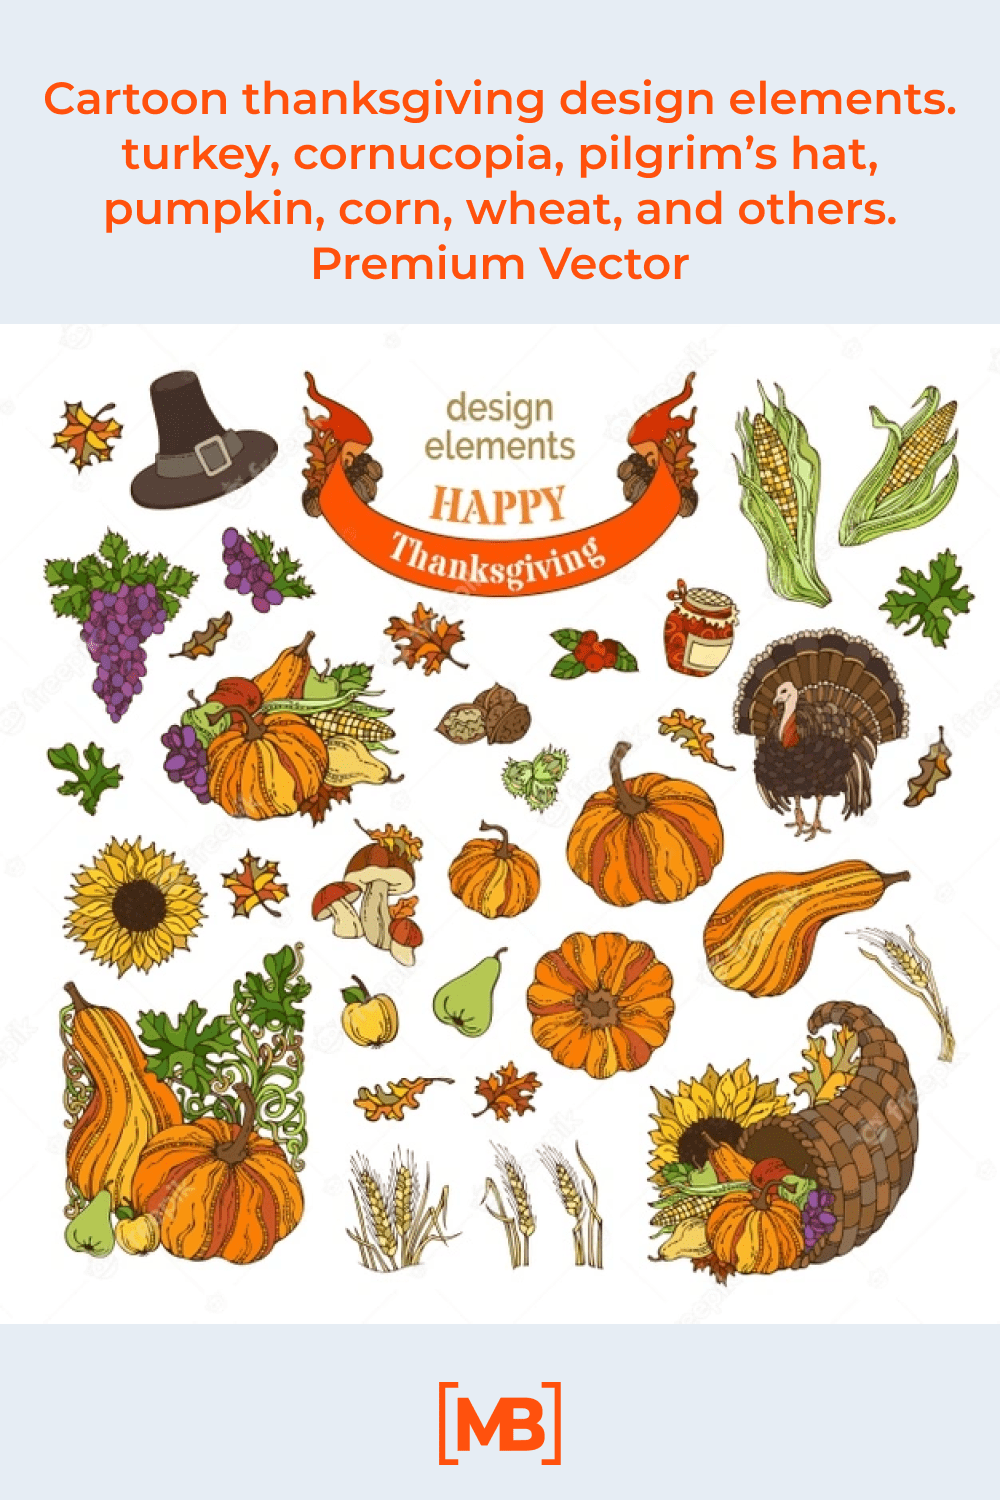 Cartoon thanksgiving design element: turkey, cornucopia, pilgrim's hat, pumpkin, corn, wheat, and others.